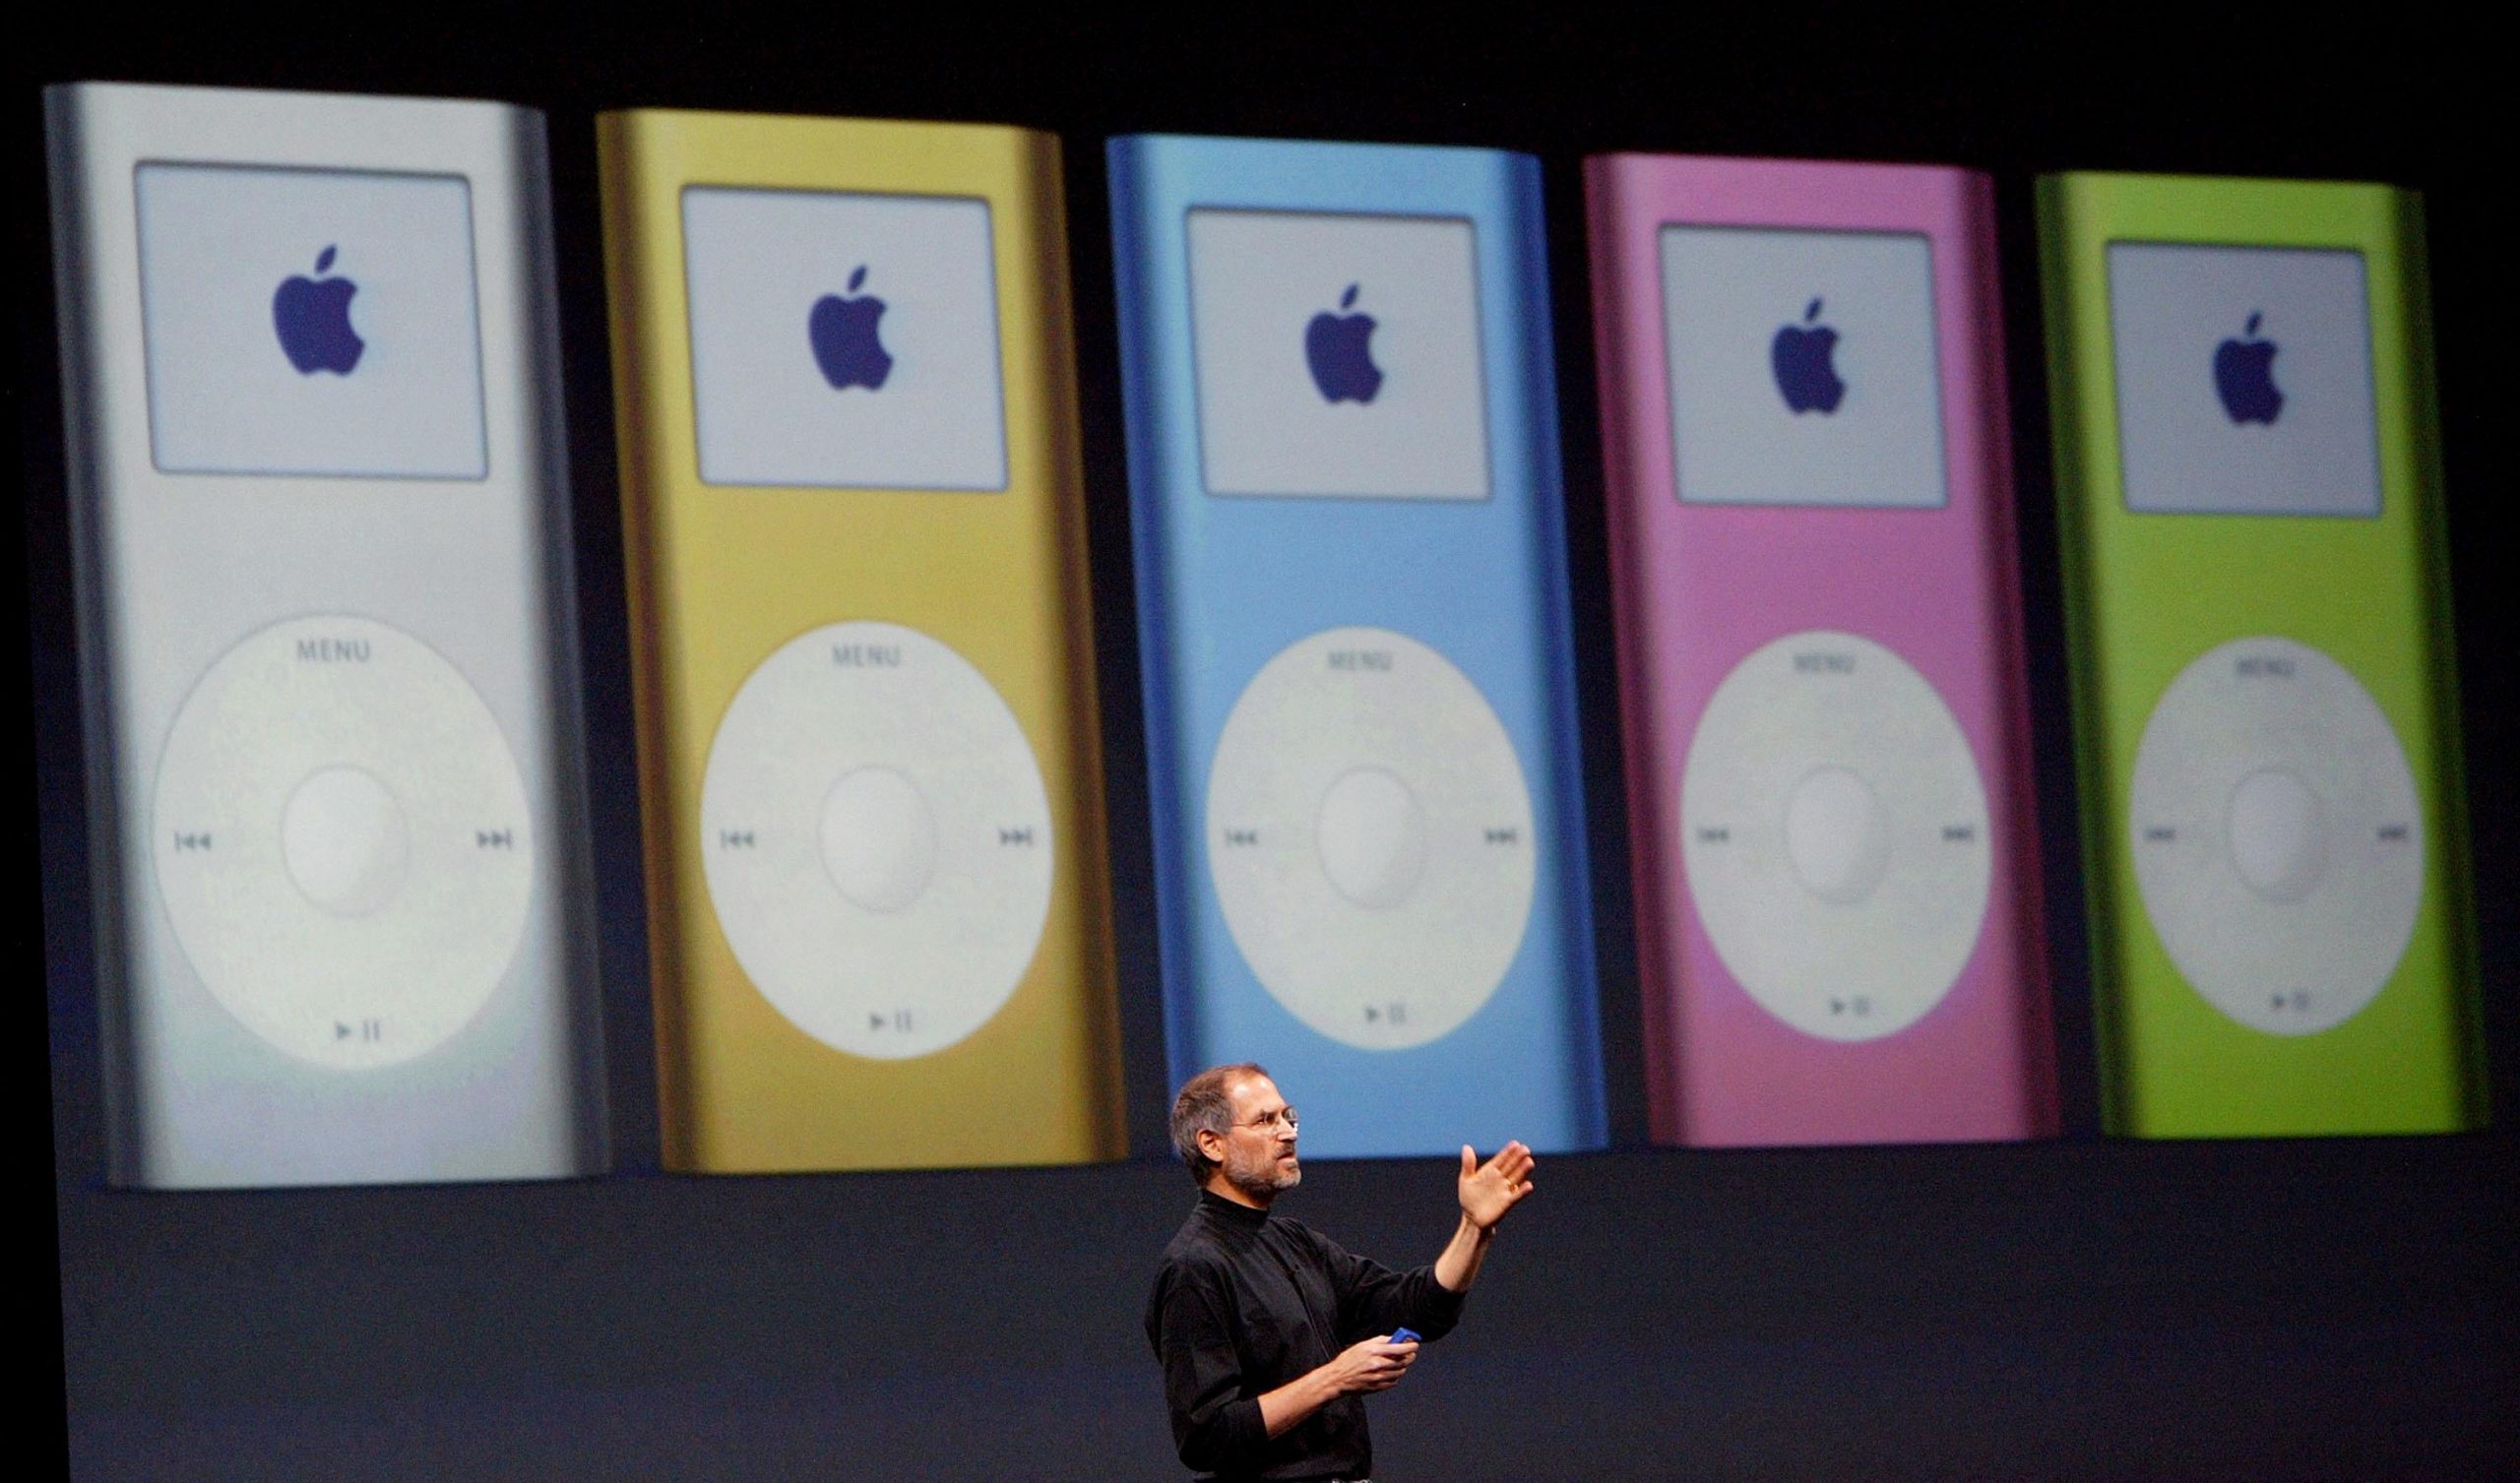 El fin de una era: Apple anunció que dejará de fabricar el iPod